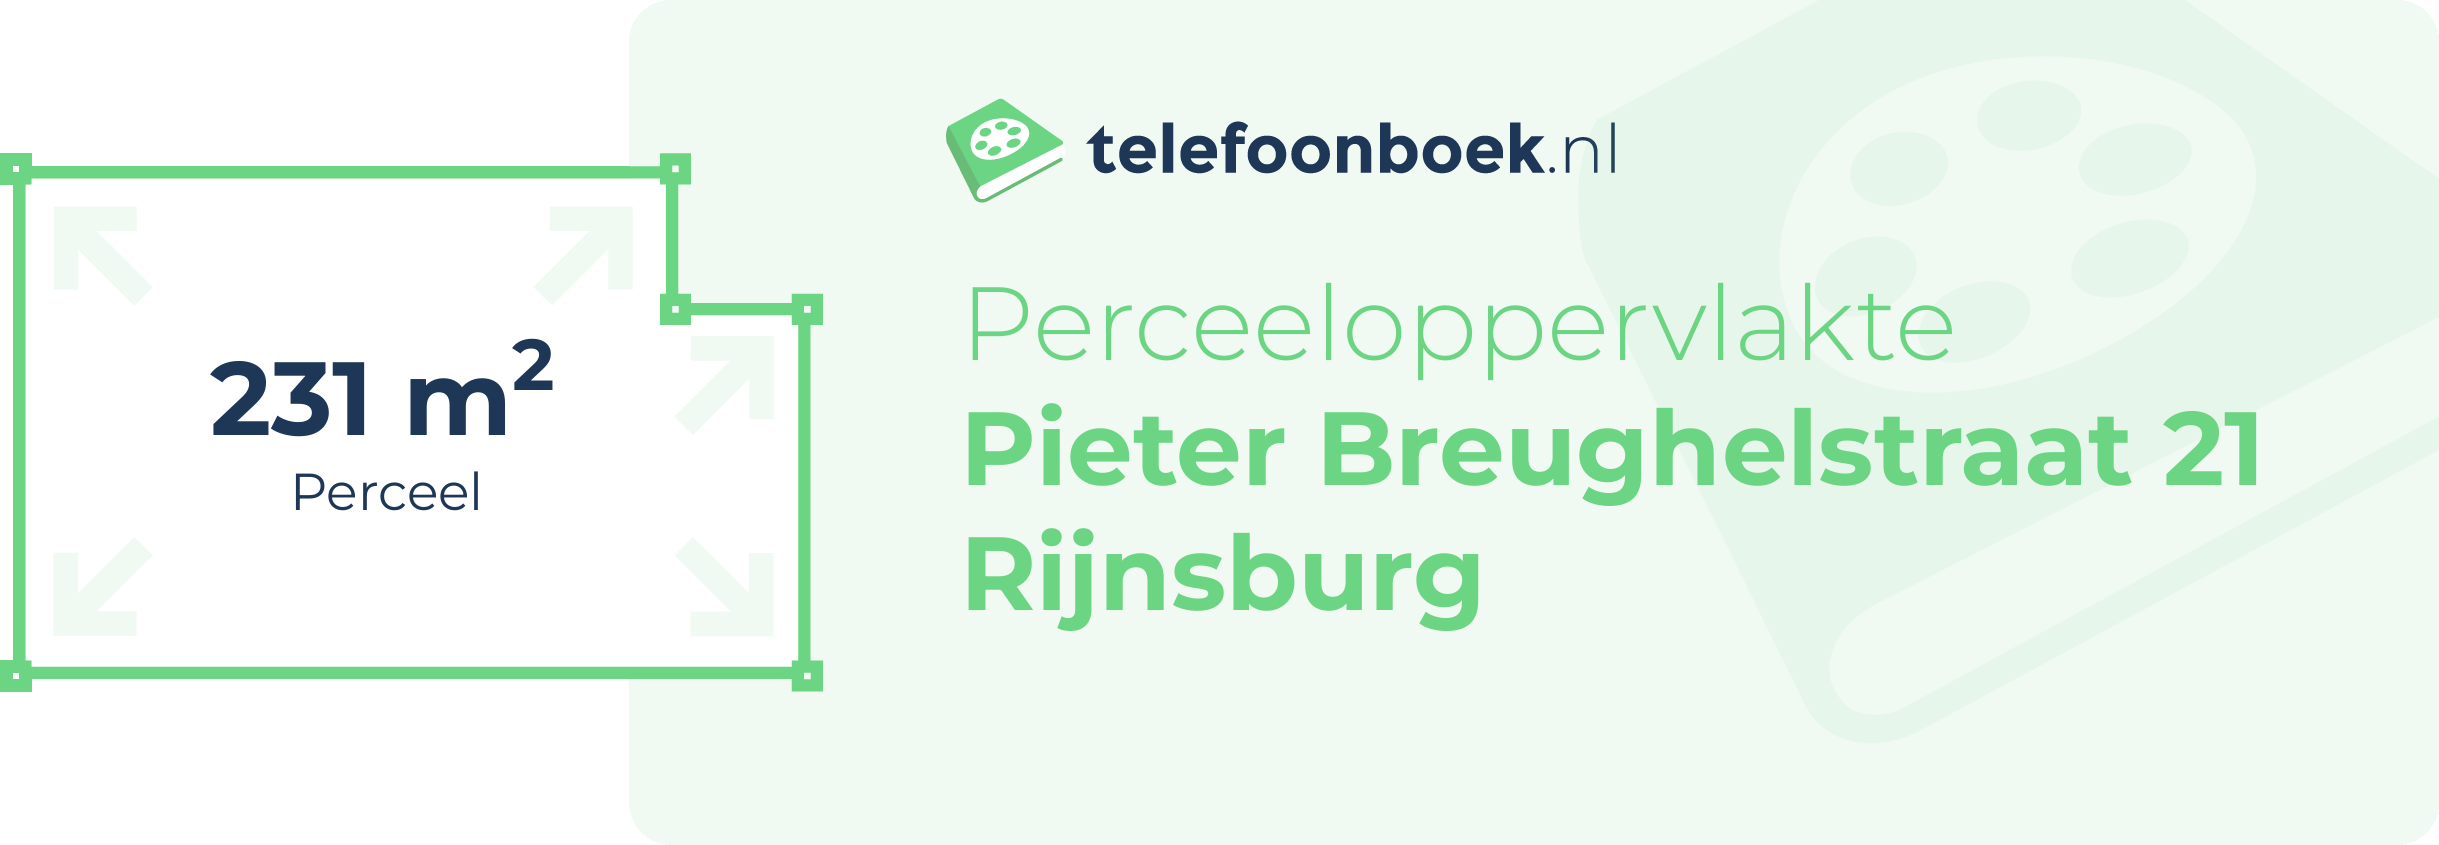 Perceeloppervlakte Pieter Breughelstraat 21 Rijnsburg